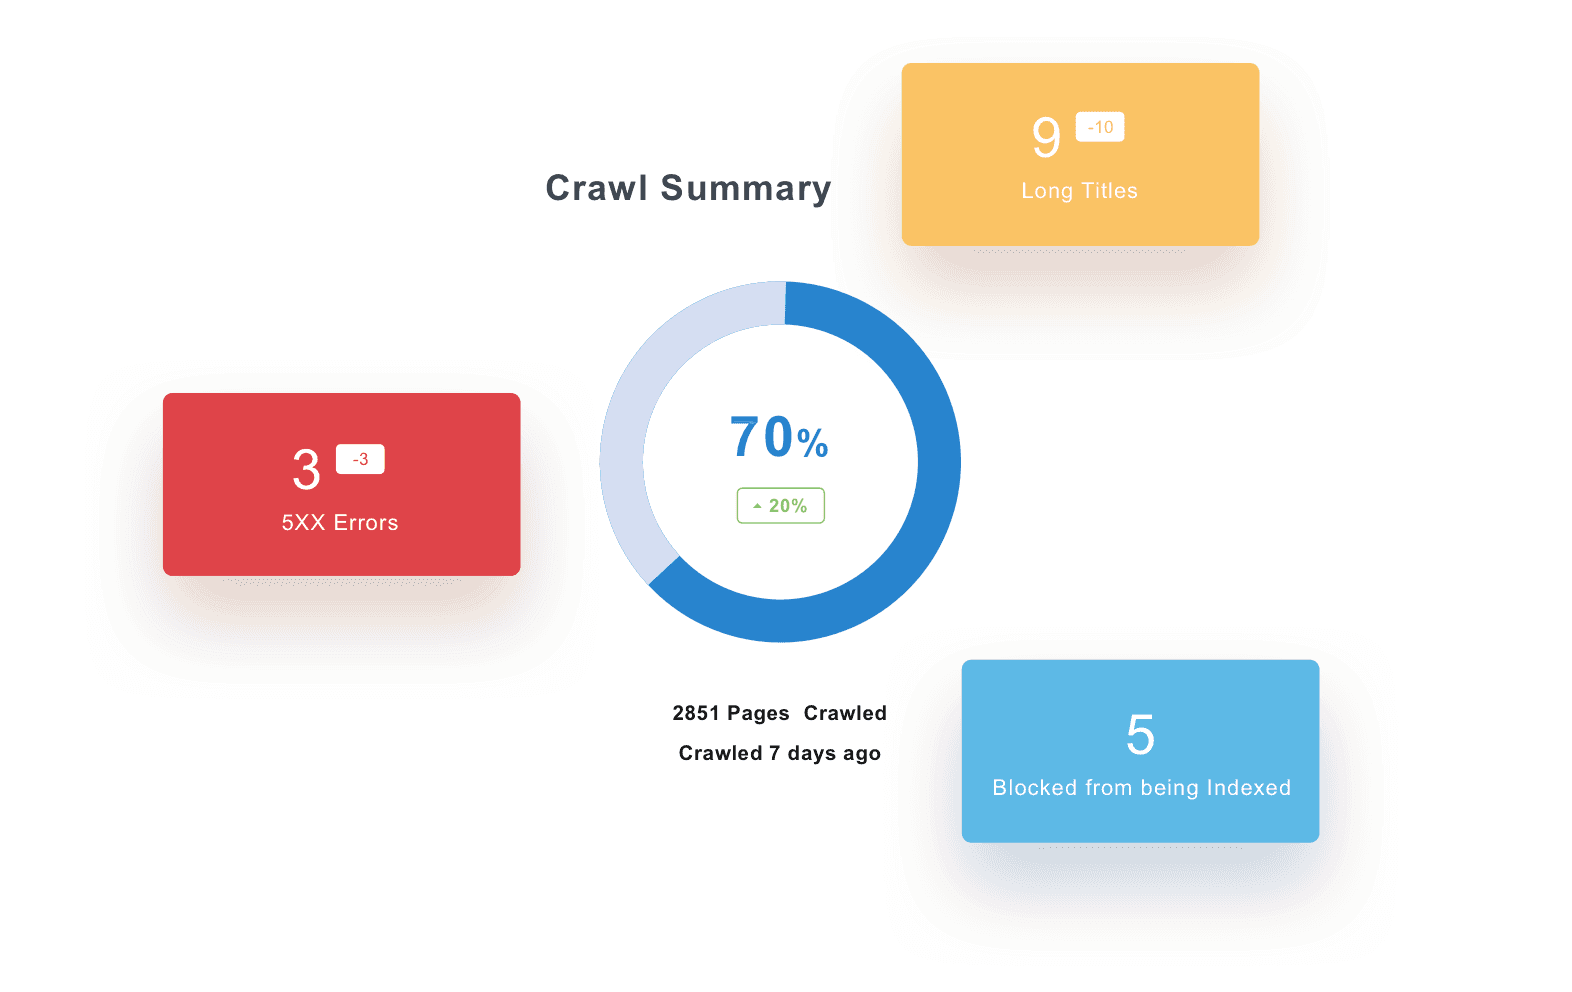 Crawl Summary from the SEO Audit Tool